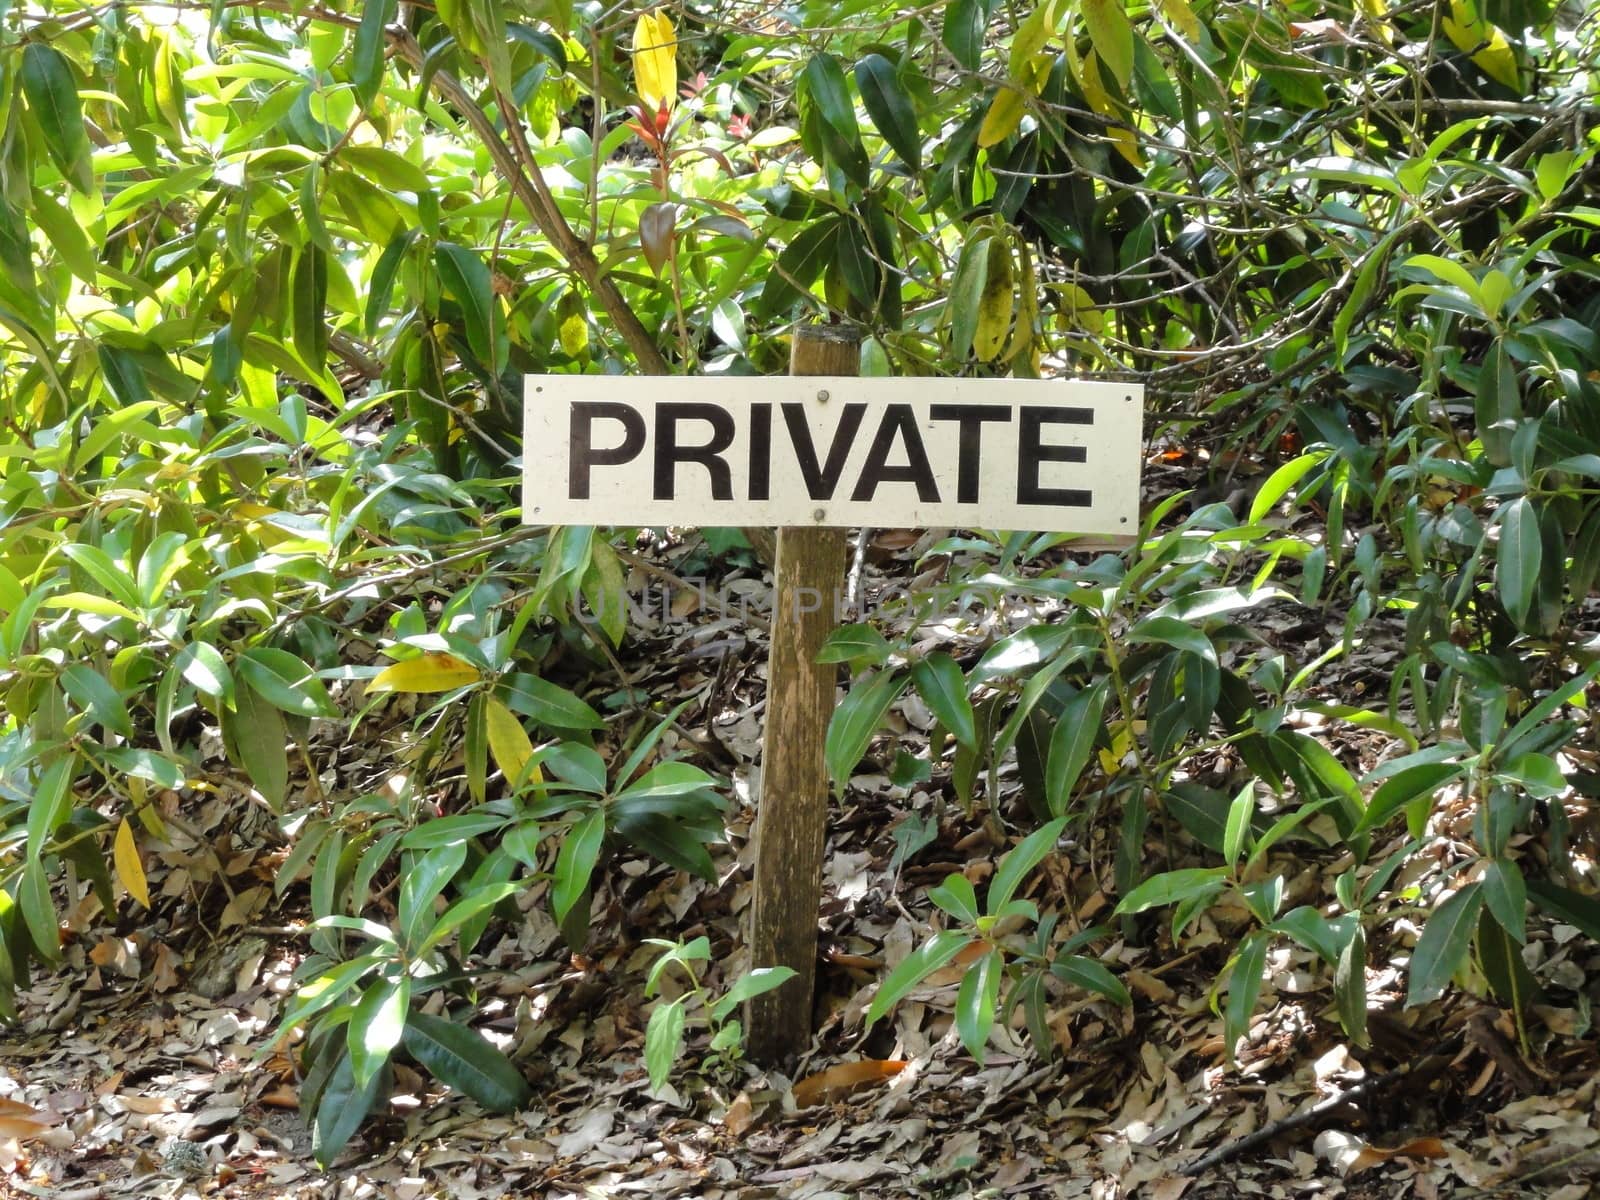 Private Land by darrenwhittingham